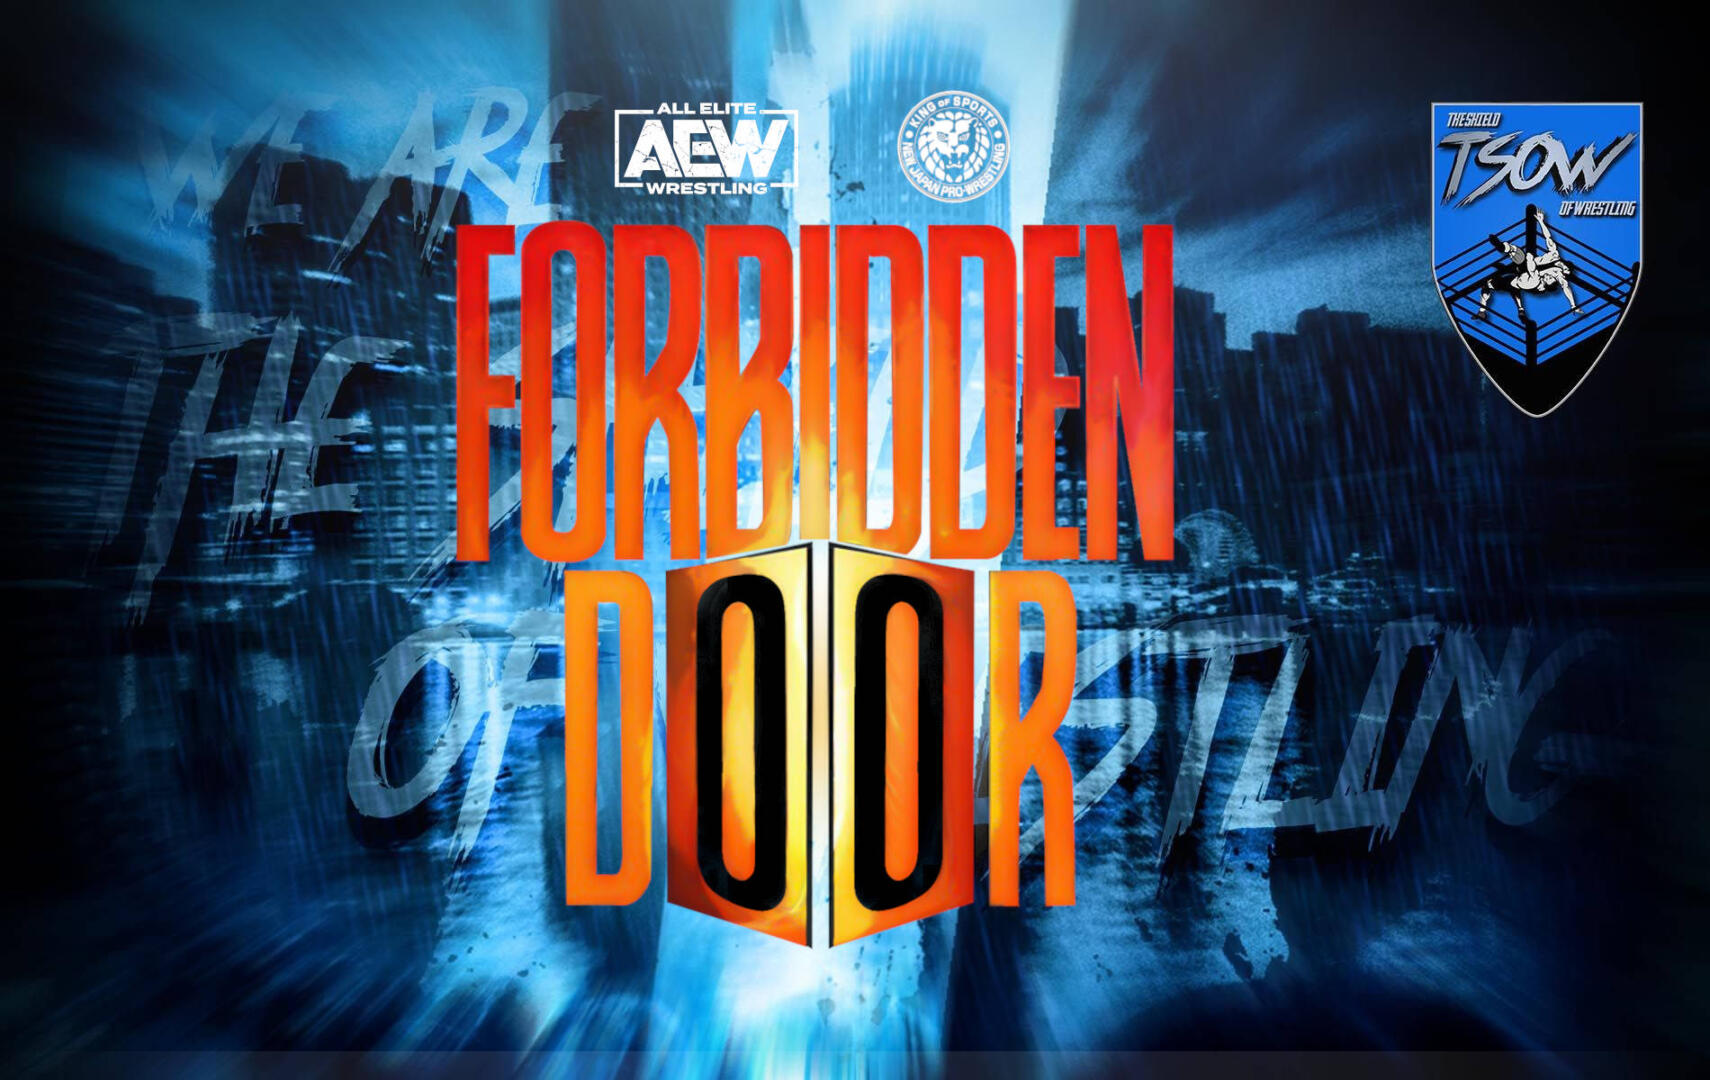 Forbidden Door: stipulazione aggiunta ad un match